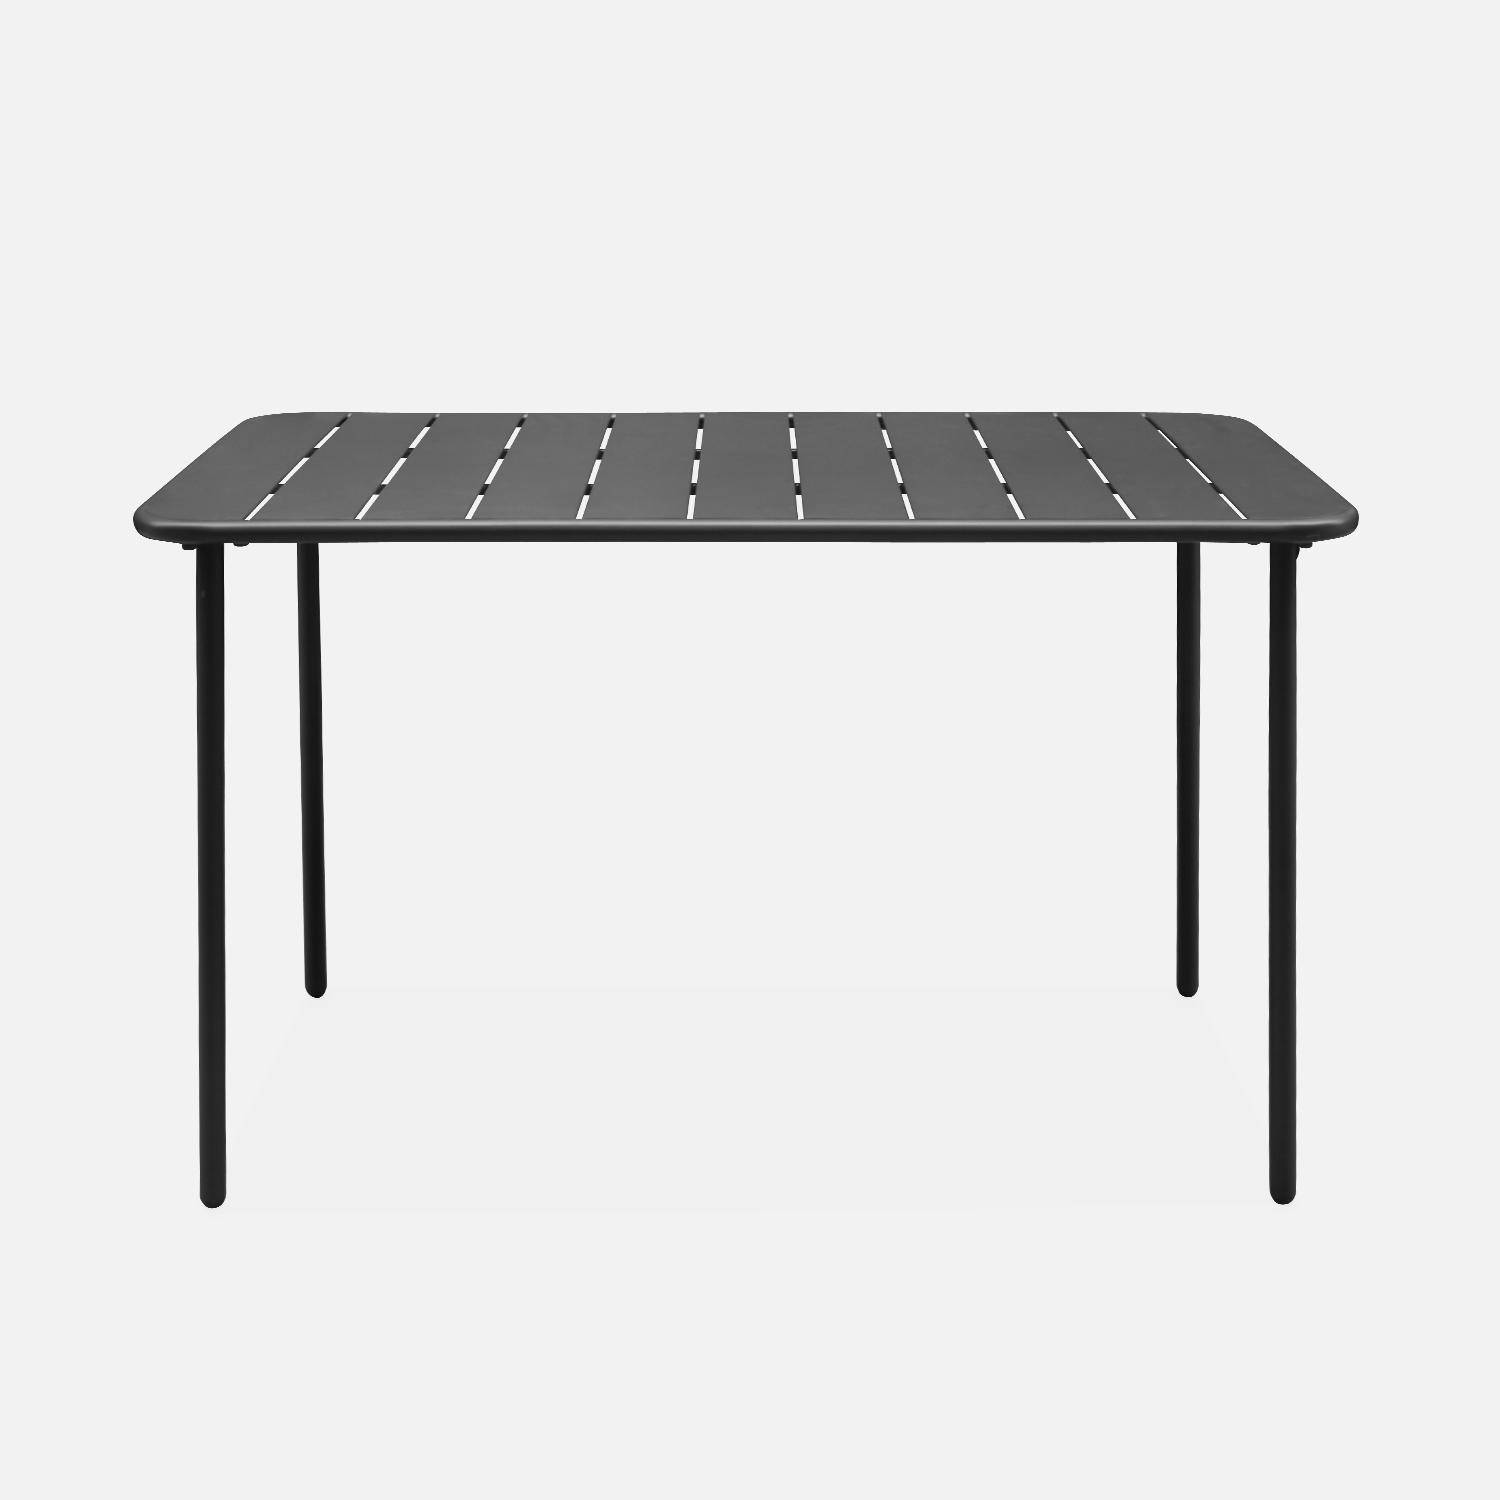 4-seater rectangular steel garden table, 120x70cm - Amelia - Anthracite Photo5